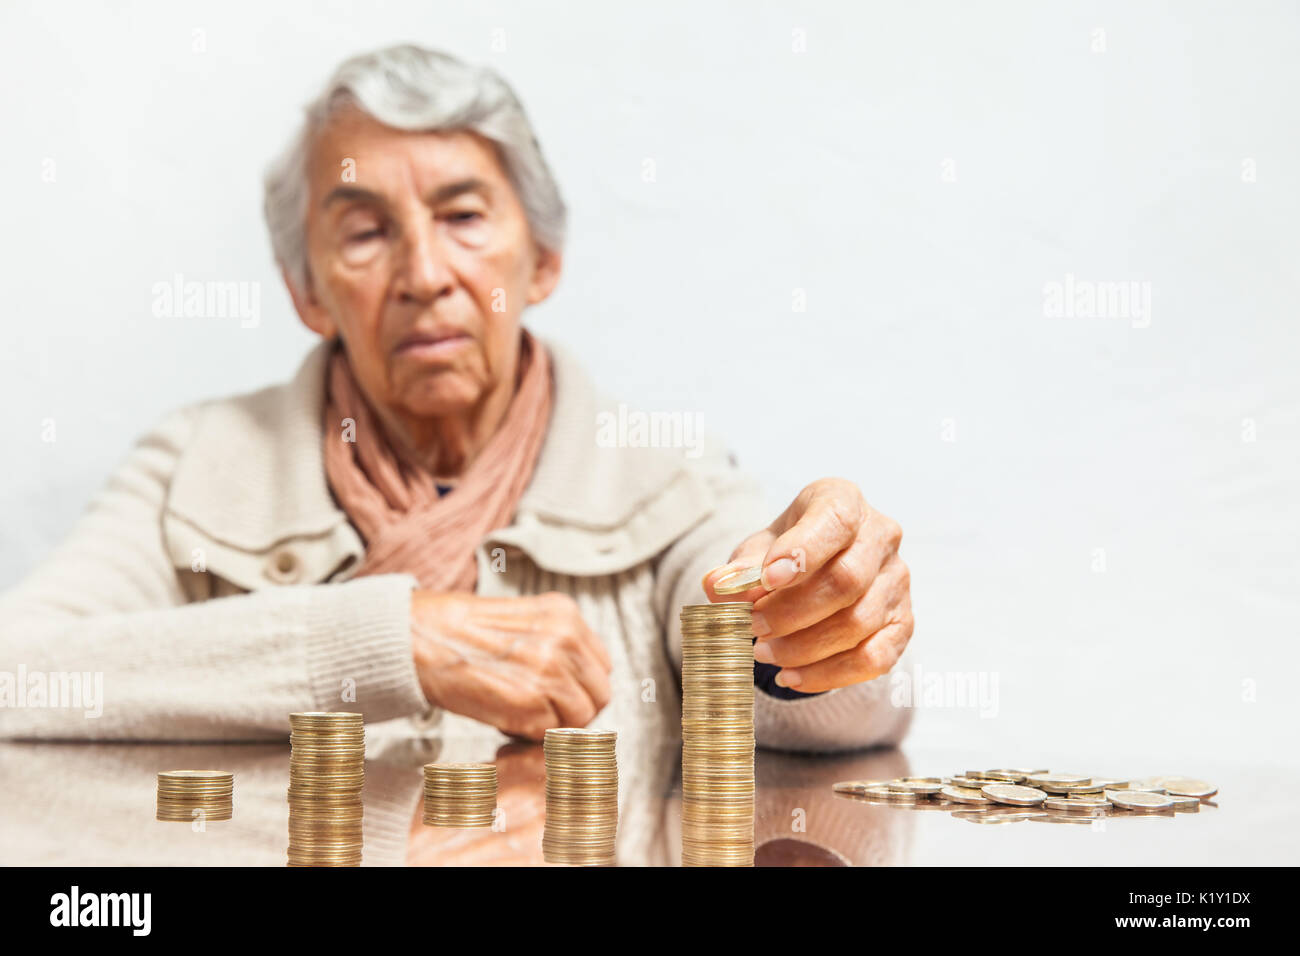 Senior woman saving money or budgeting Stock Photo